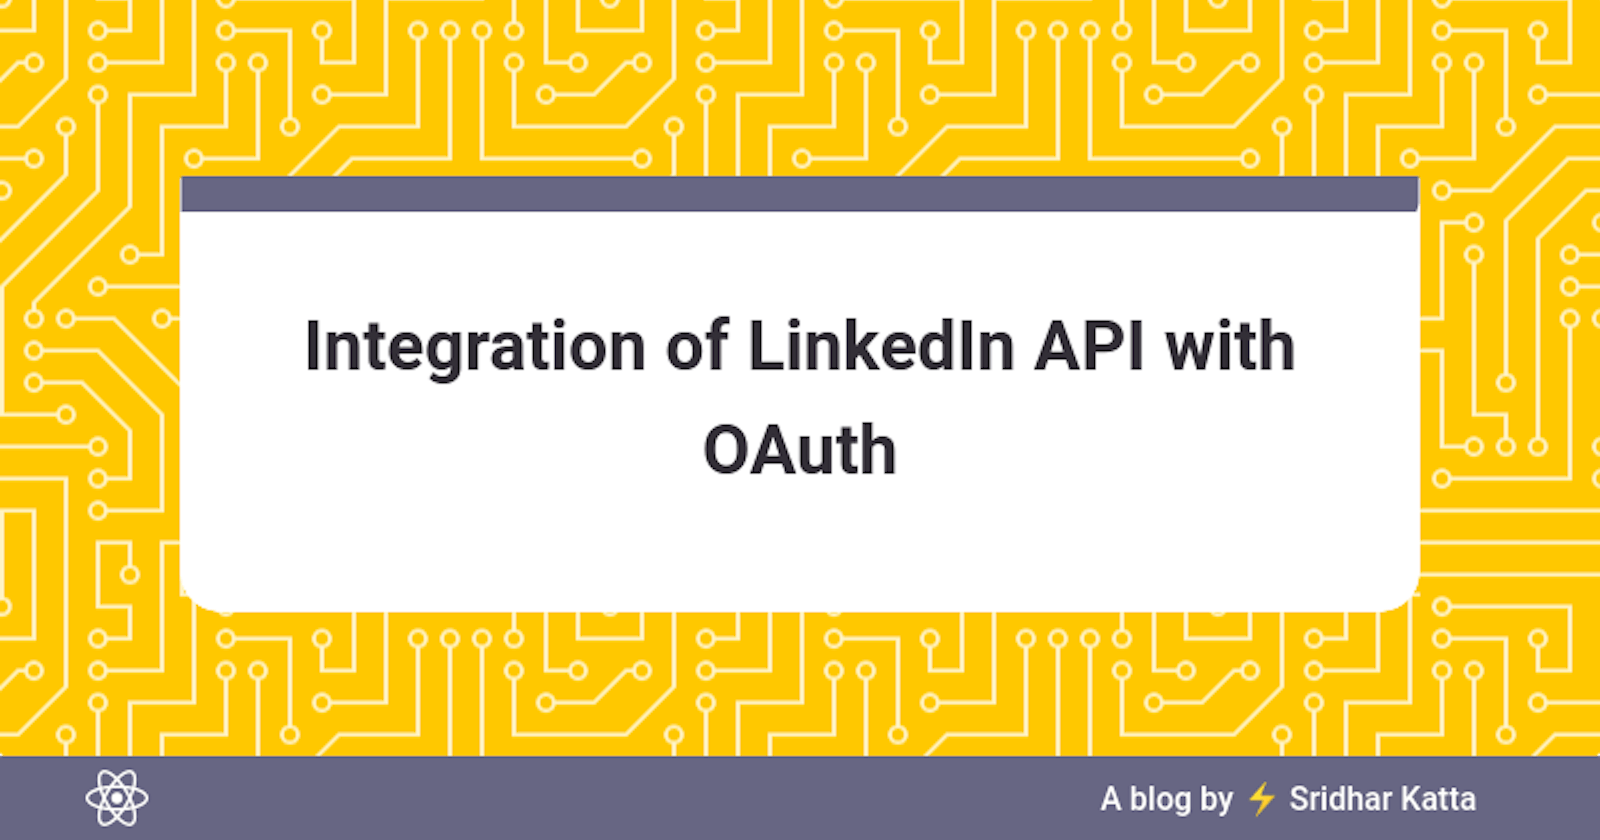 How to setup the Integration of LinkedIn API with OAuth?